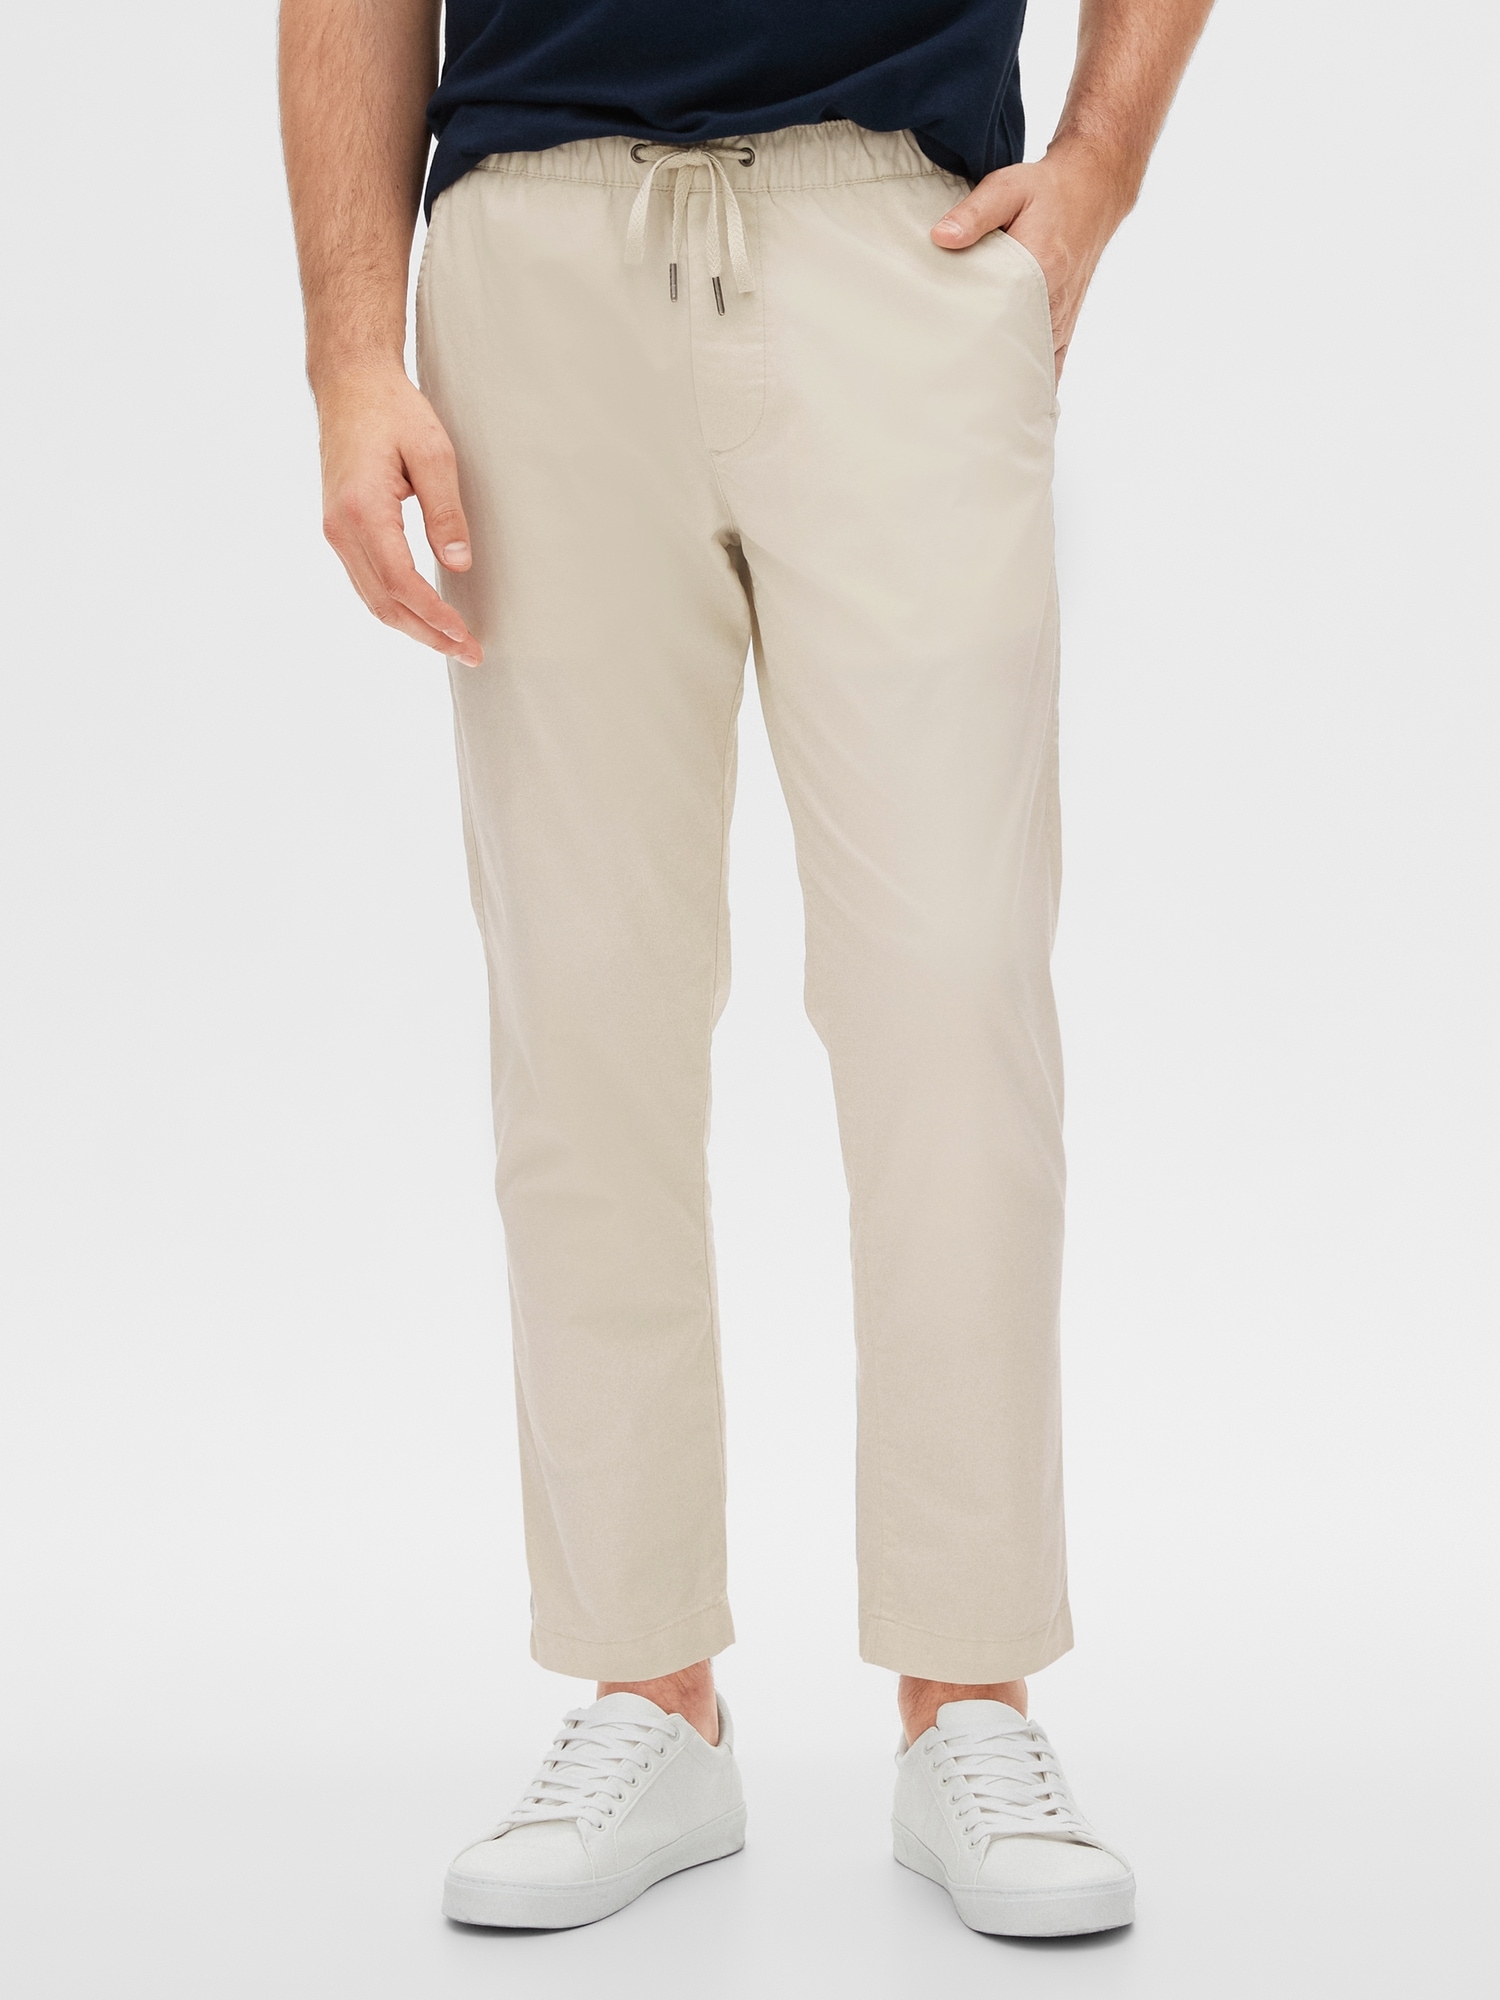 Easy Pants in Twill | Gap Factory